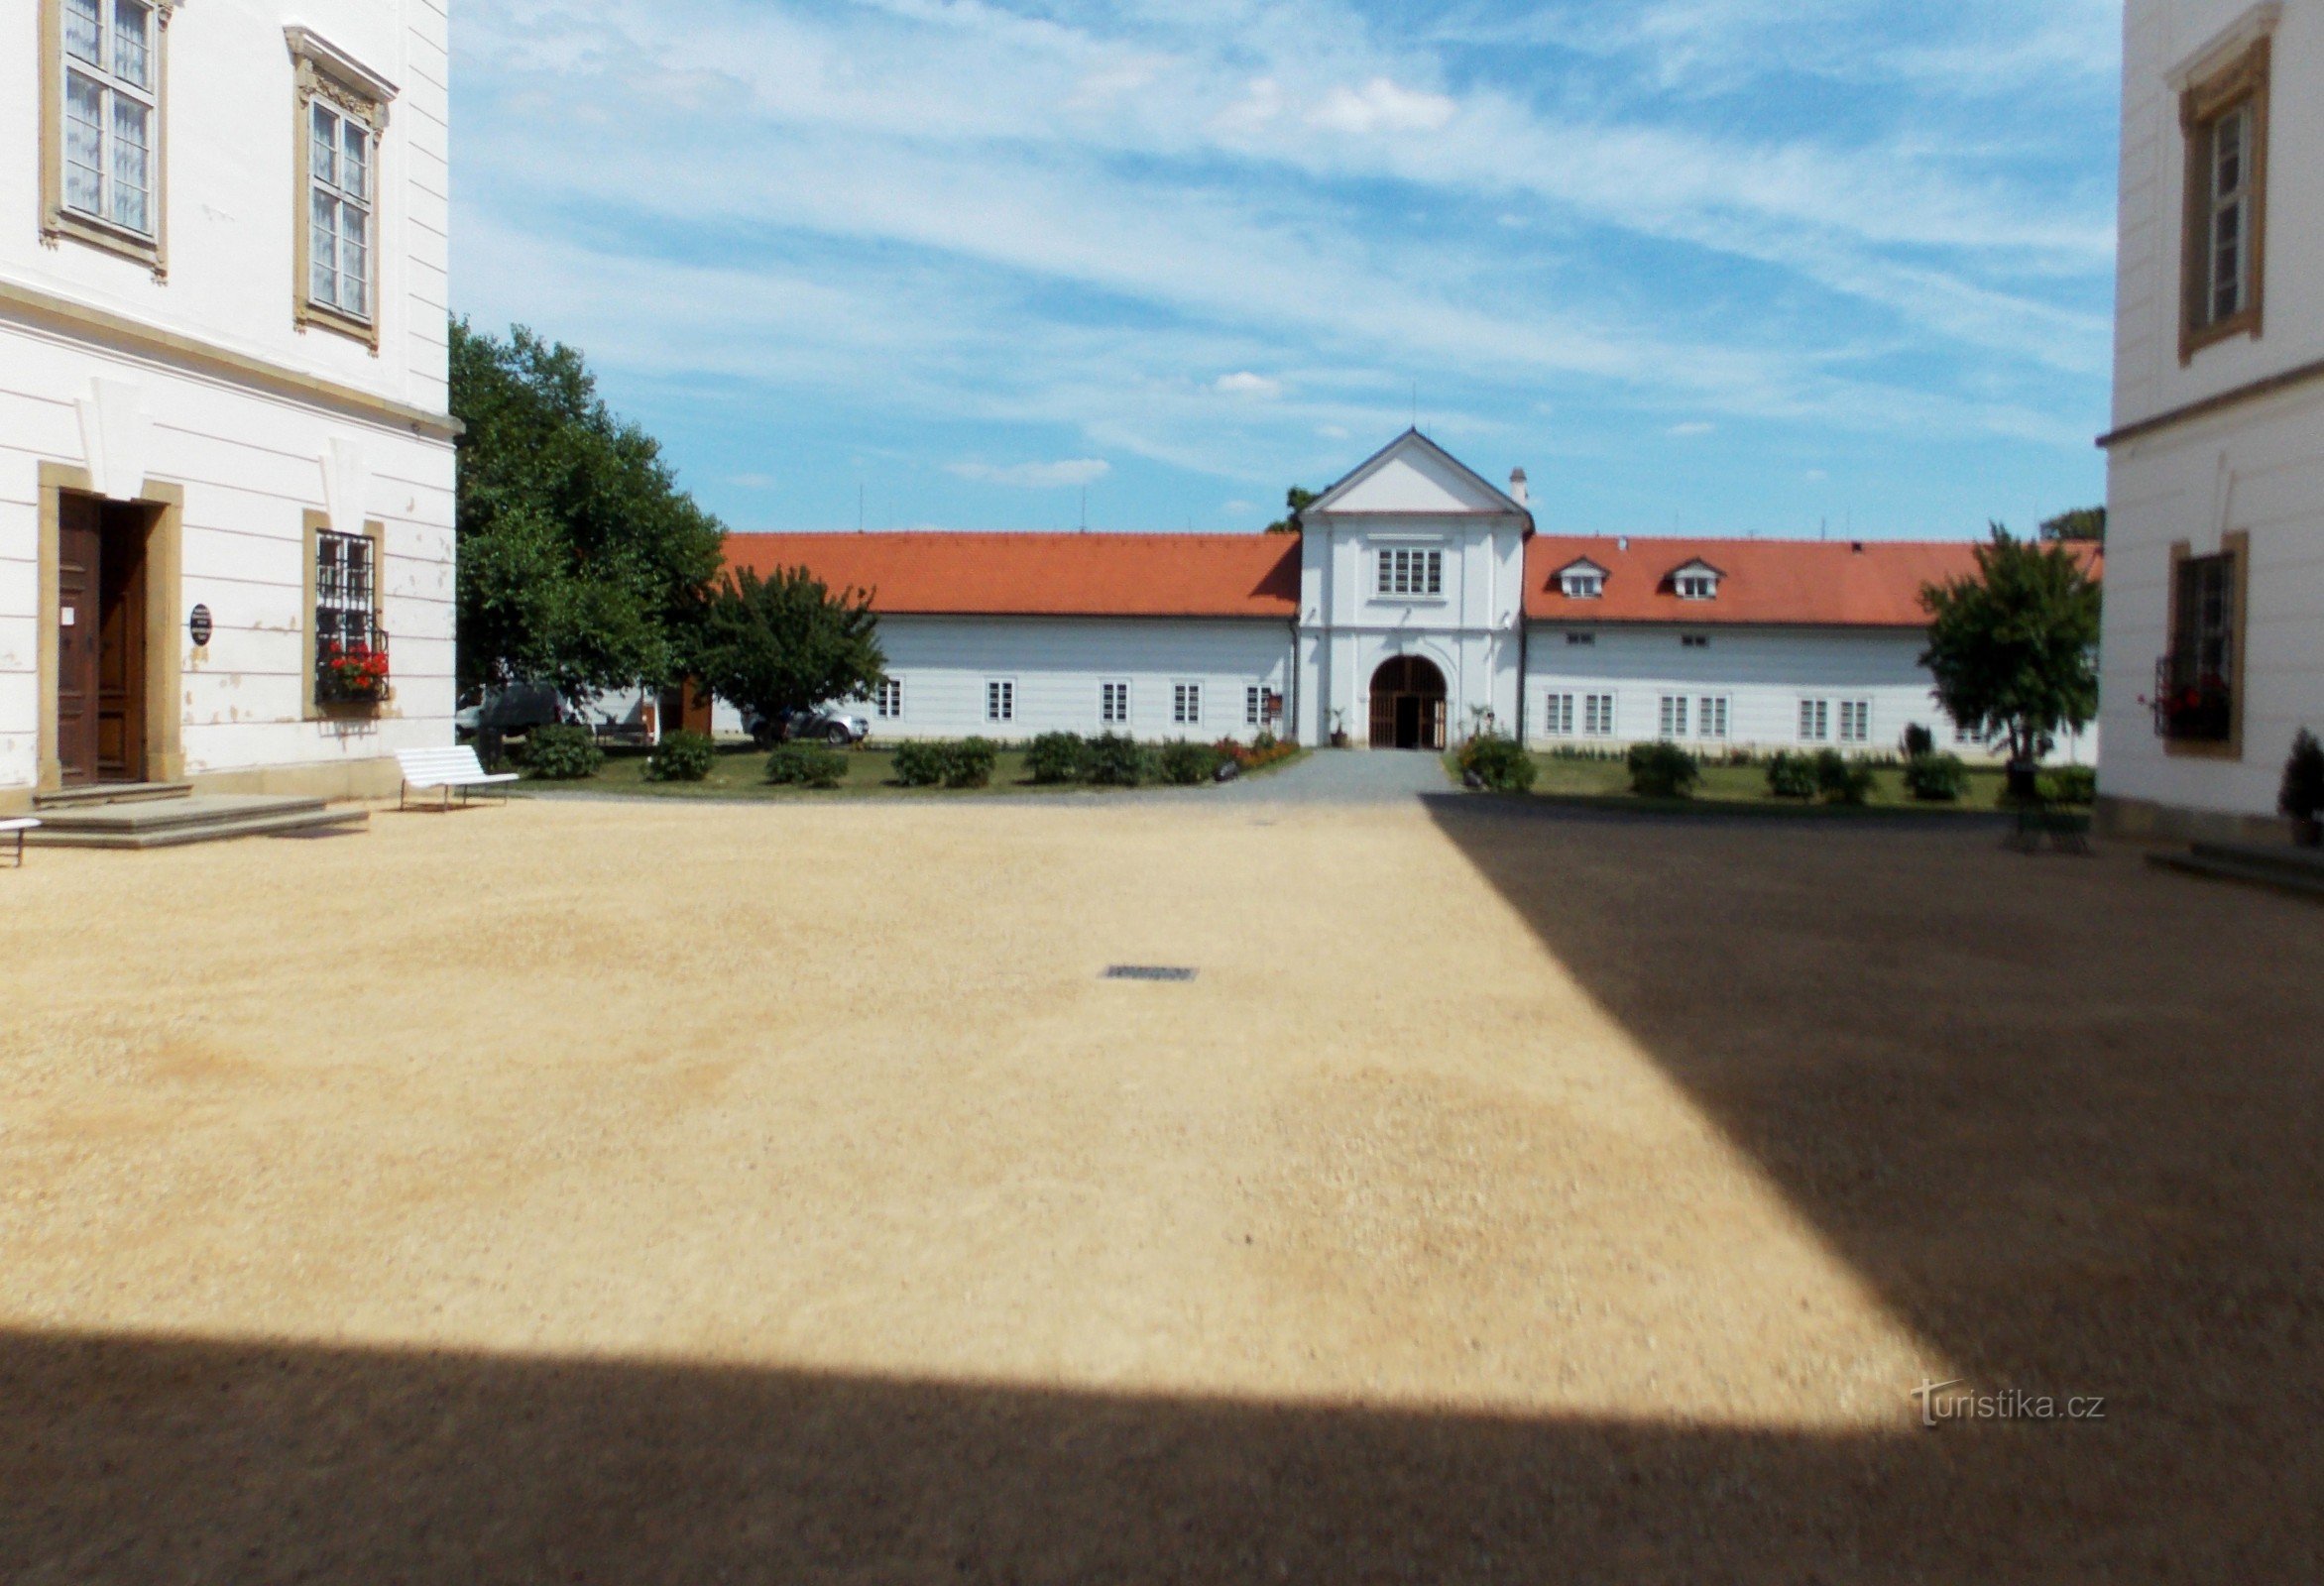 Summer walk through the castle and garden in Vizovice